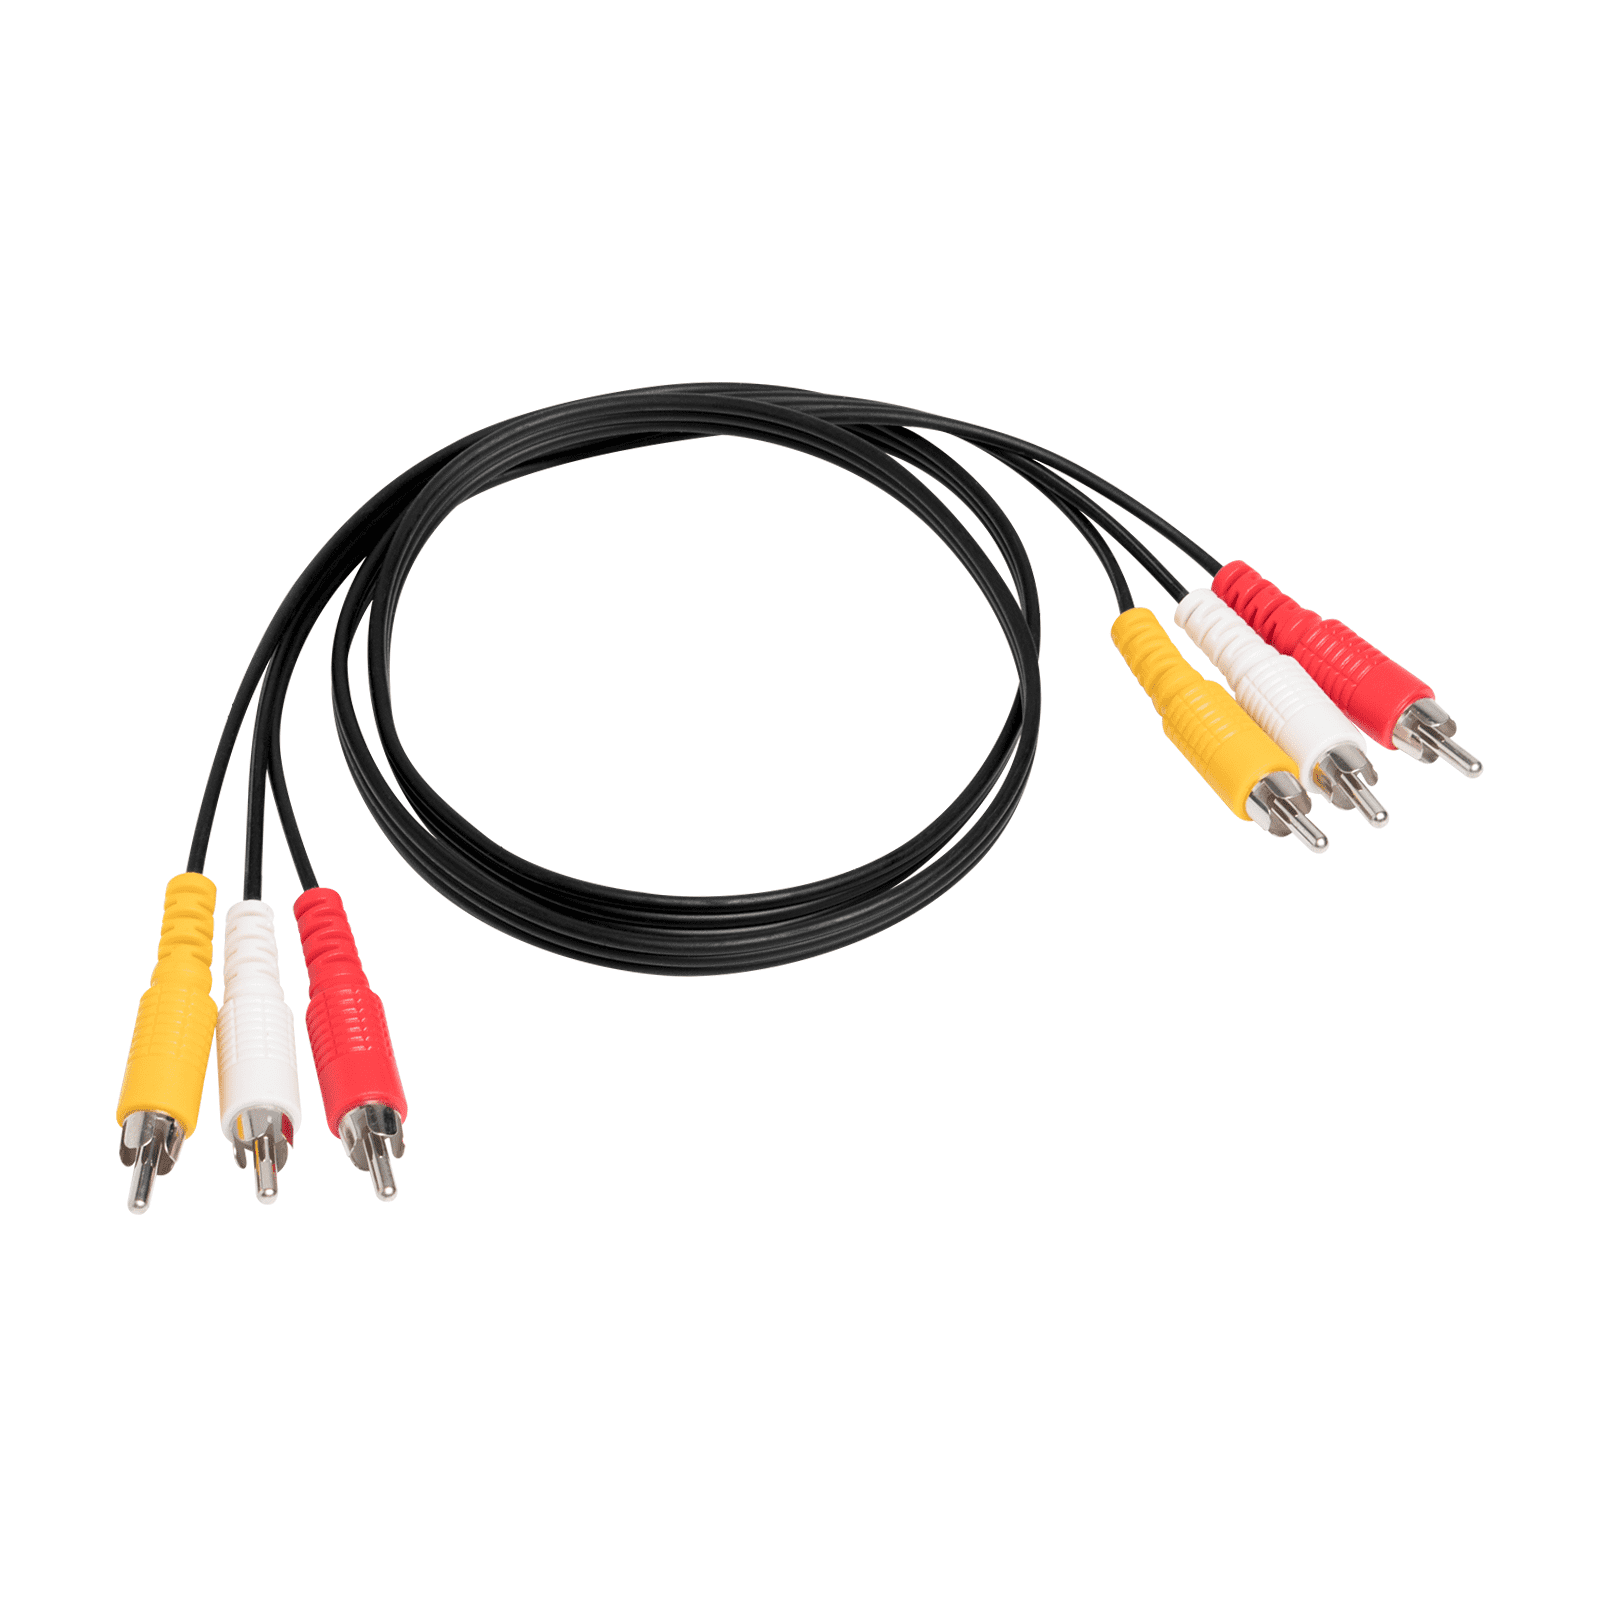 Cuziss Premium High Resolution AV Cable 3 Analog AV Multi Out to